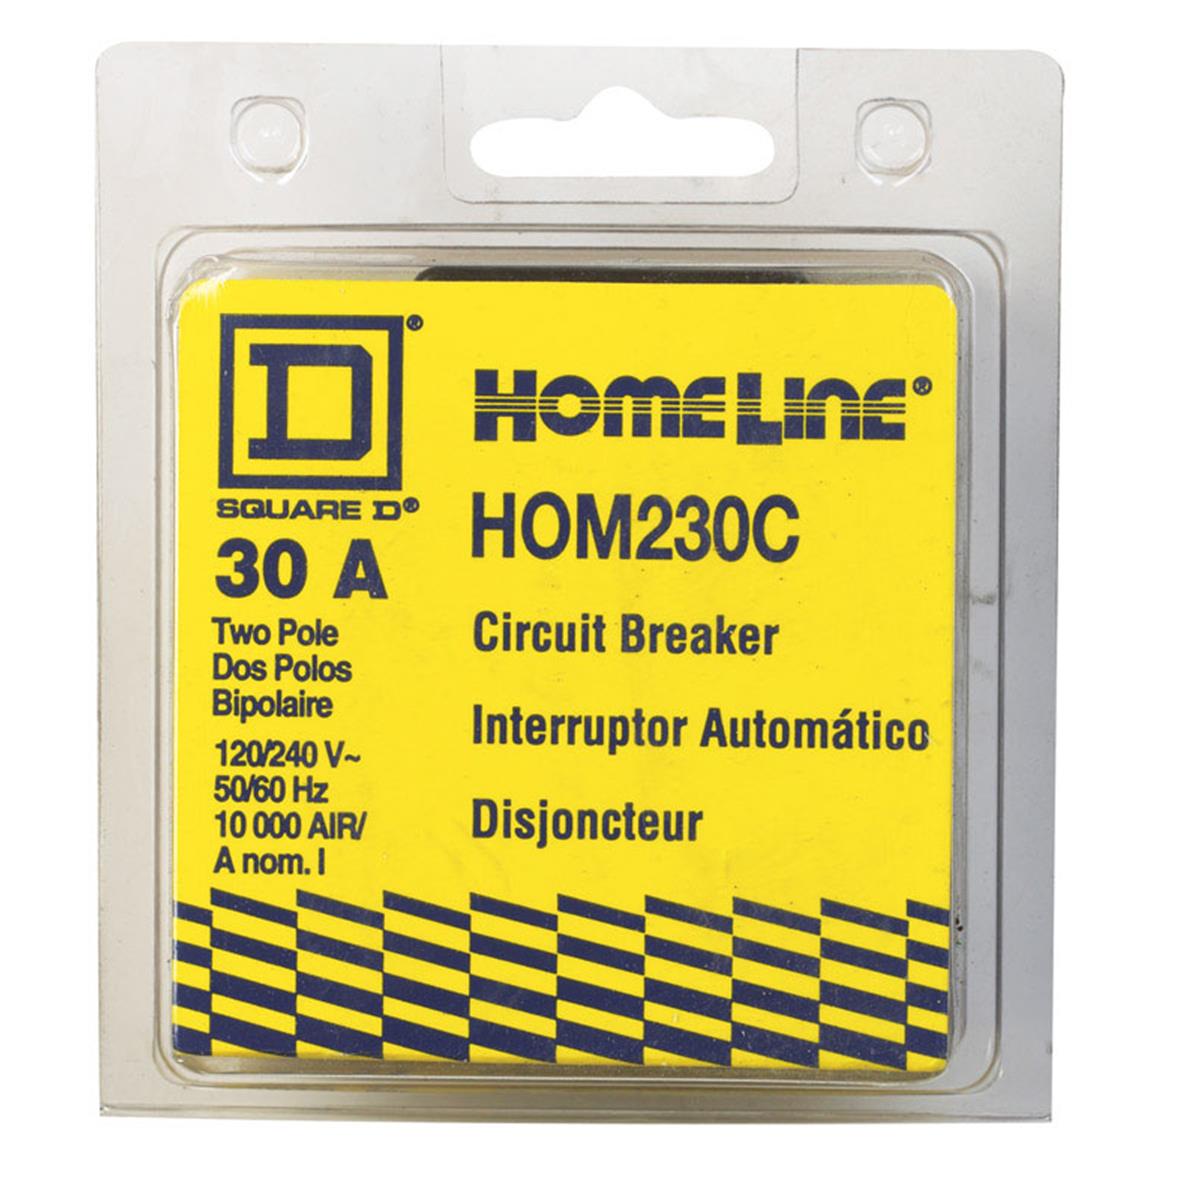 Hom230c 2 In. 30 A, 2-pole Homeline Plug-on Circuit Breaker